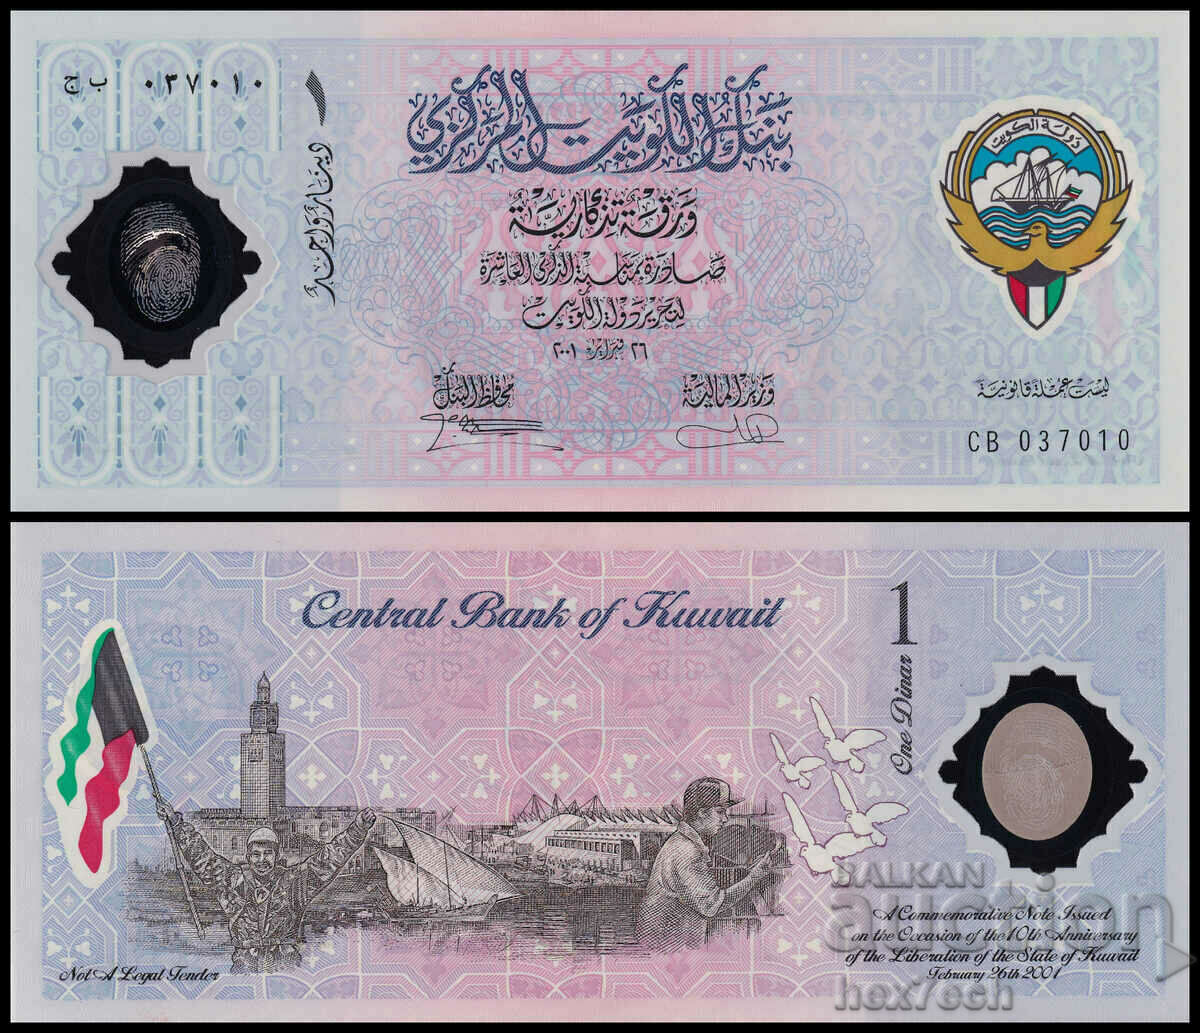 ❤️ ⭐ Kuwait 2001 1 dinar polymer jubilee UNC new ⭐ ❤️